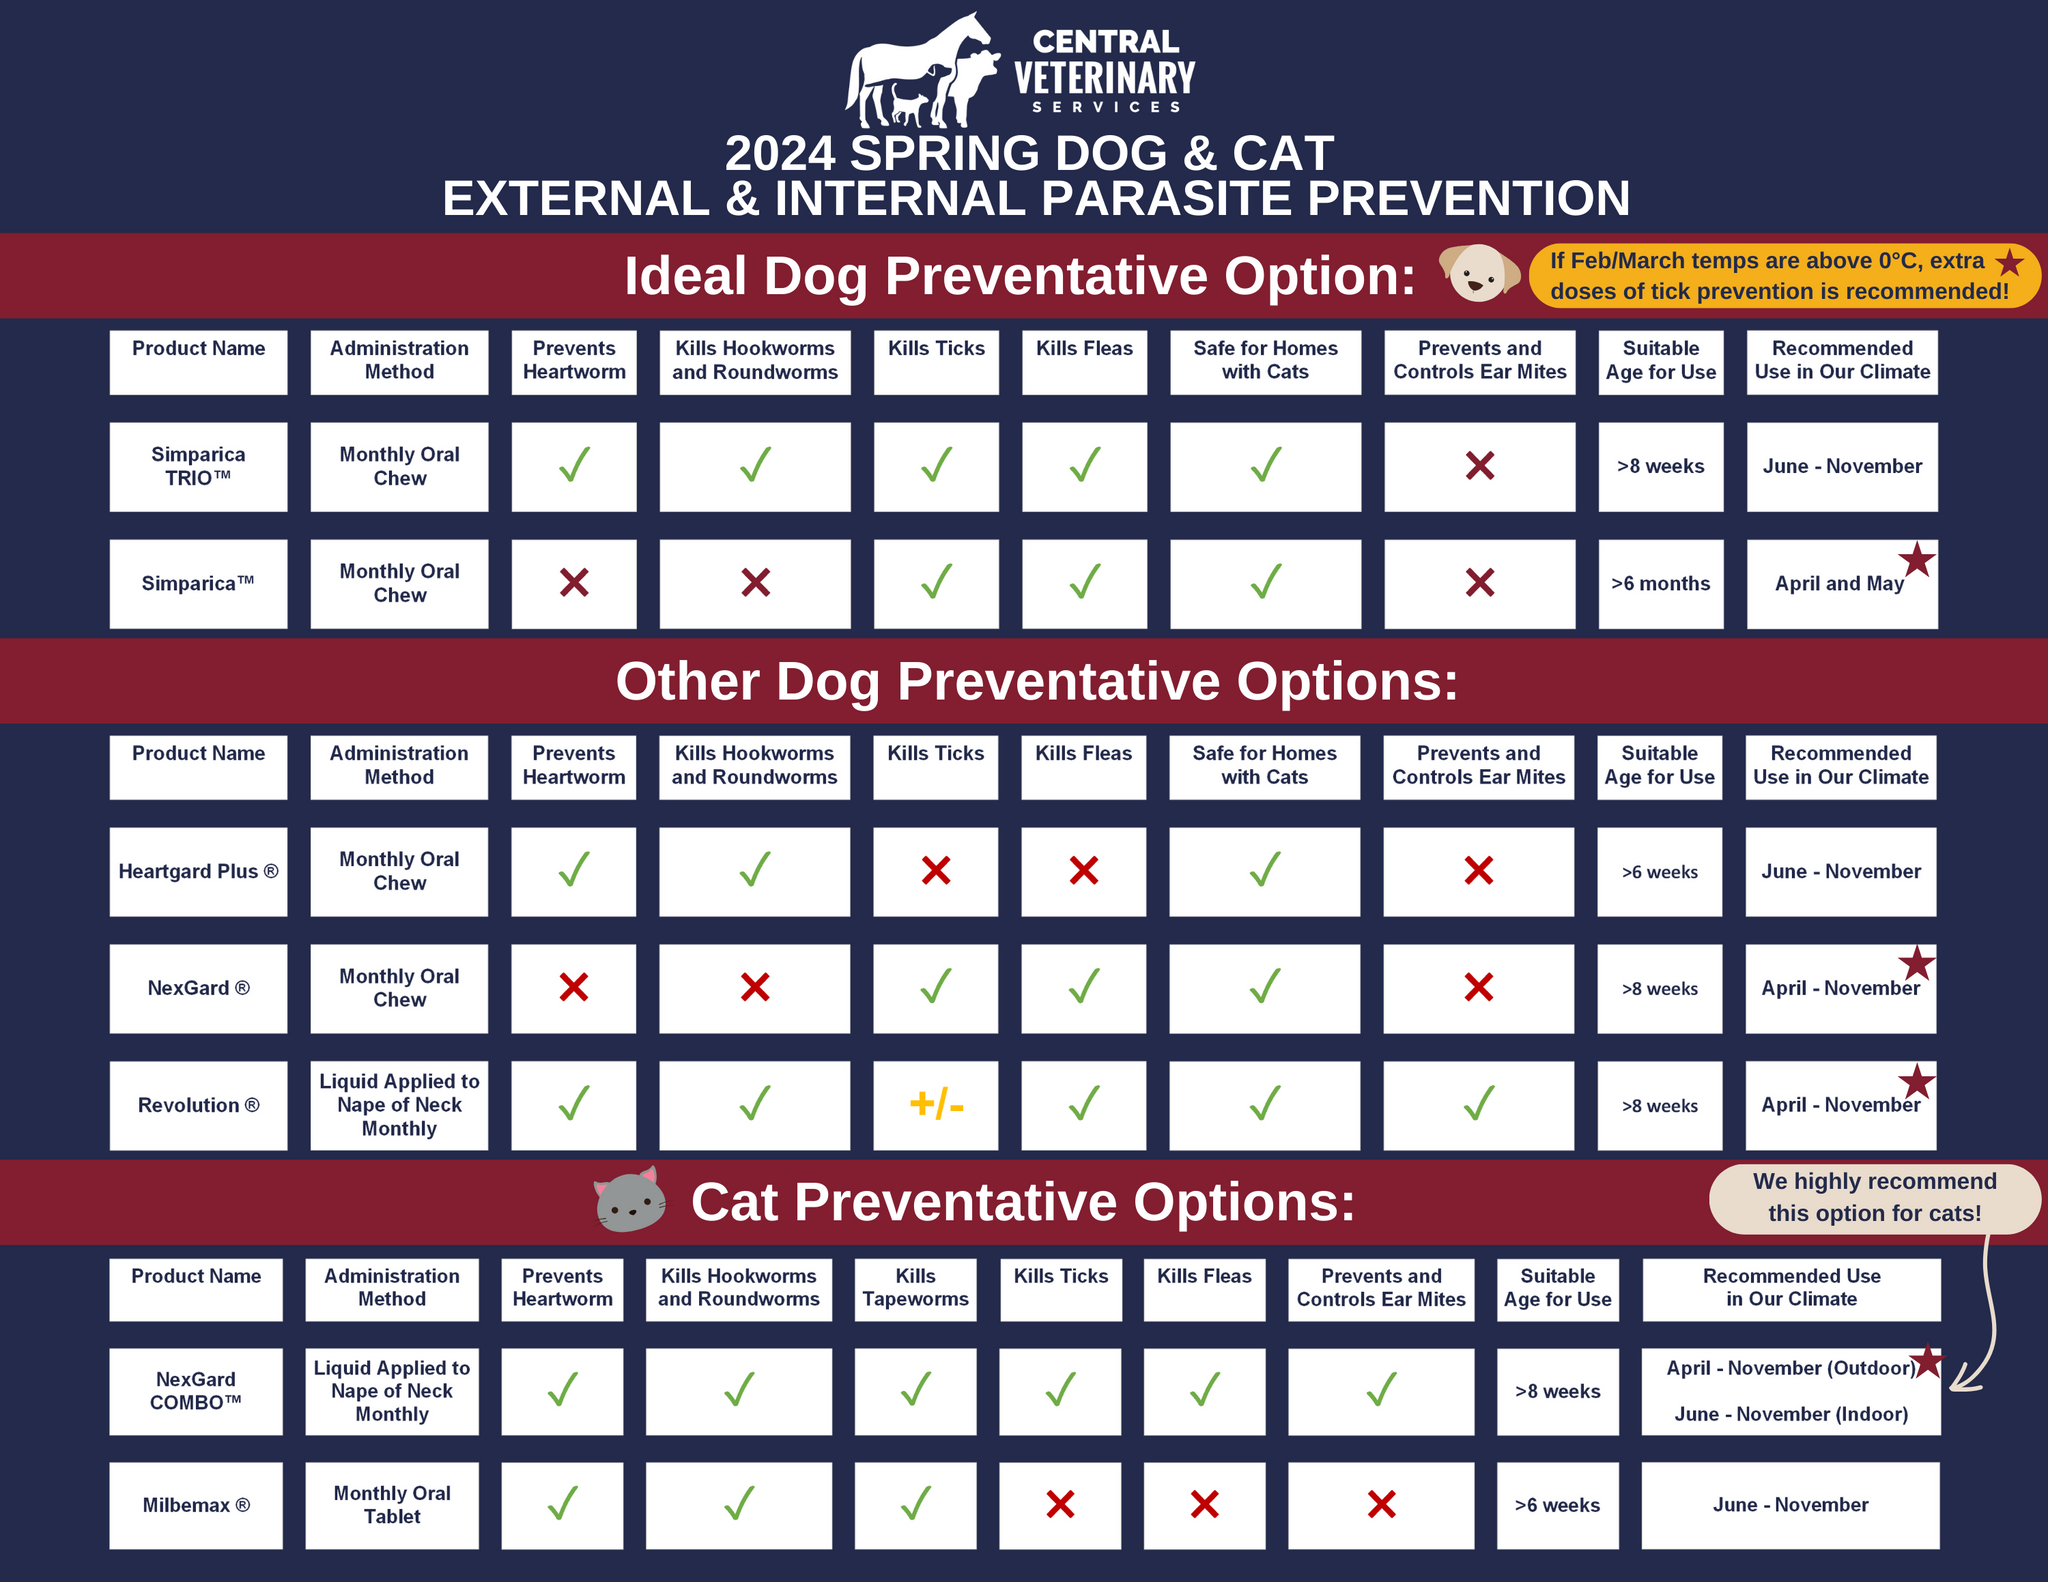 2024 spring dog & cat external & internal parasite prevention recommendations